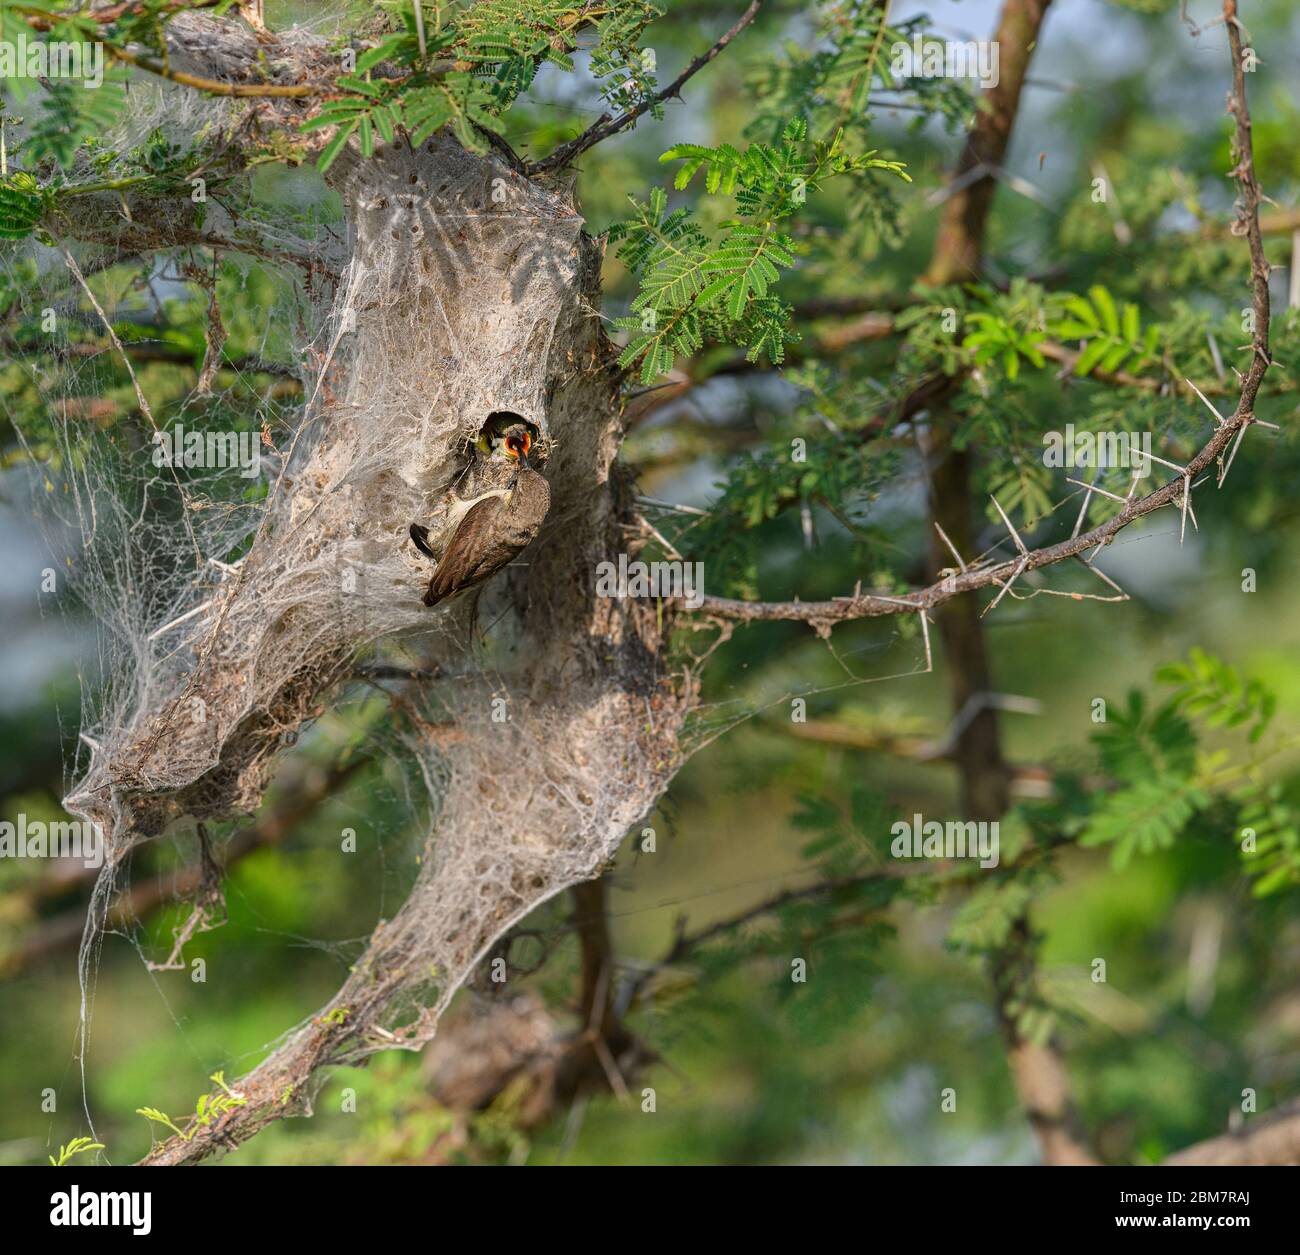 Purple Sunbird (Female) feeding baby bird in the bird's nest.  Abstract Blurry Nature Background. Selective Focus. Stock Photo